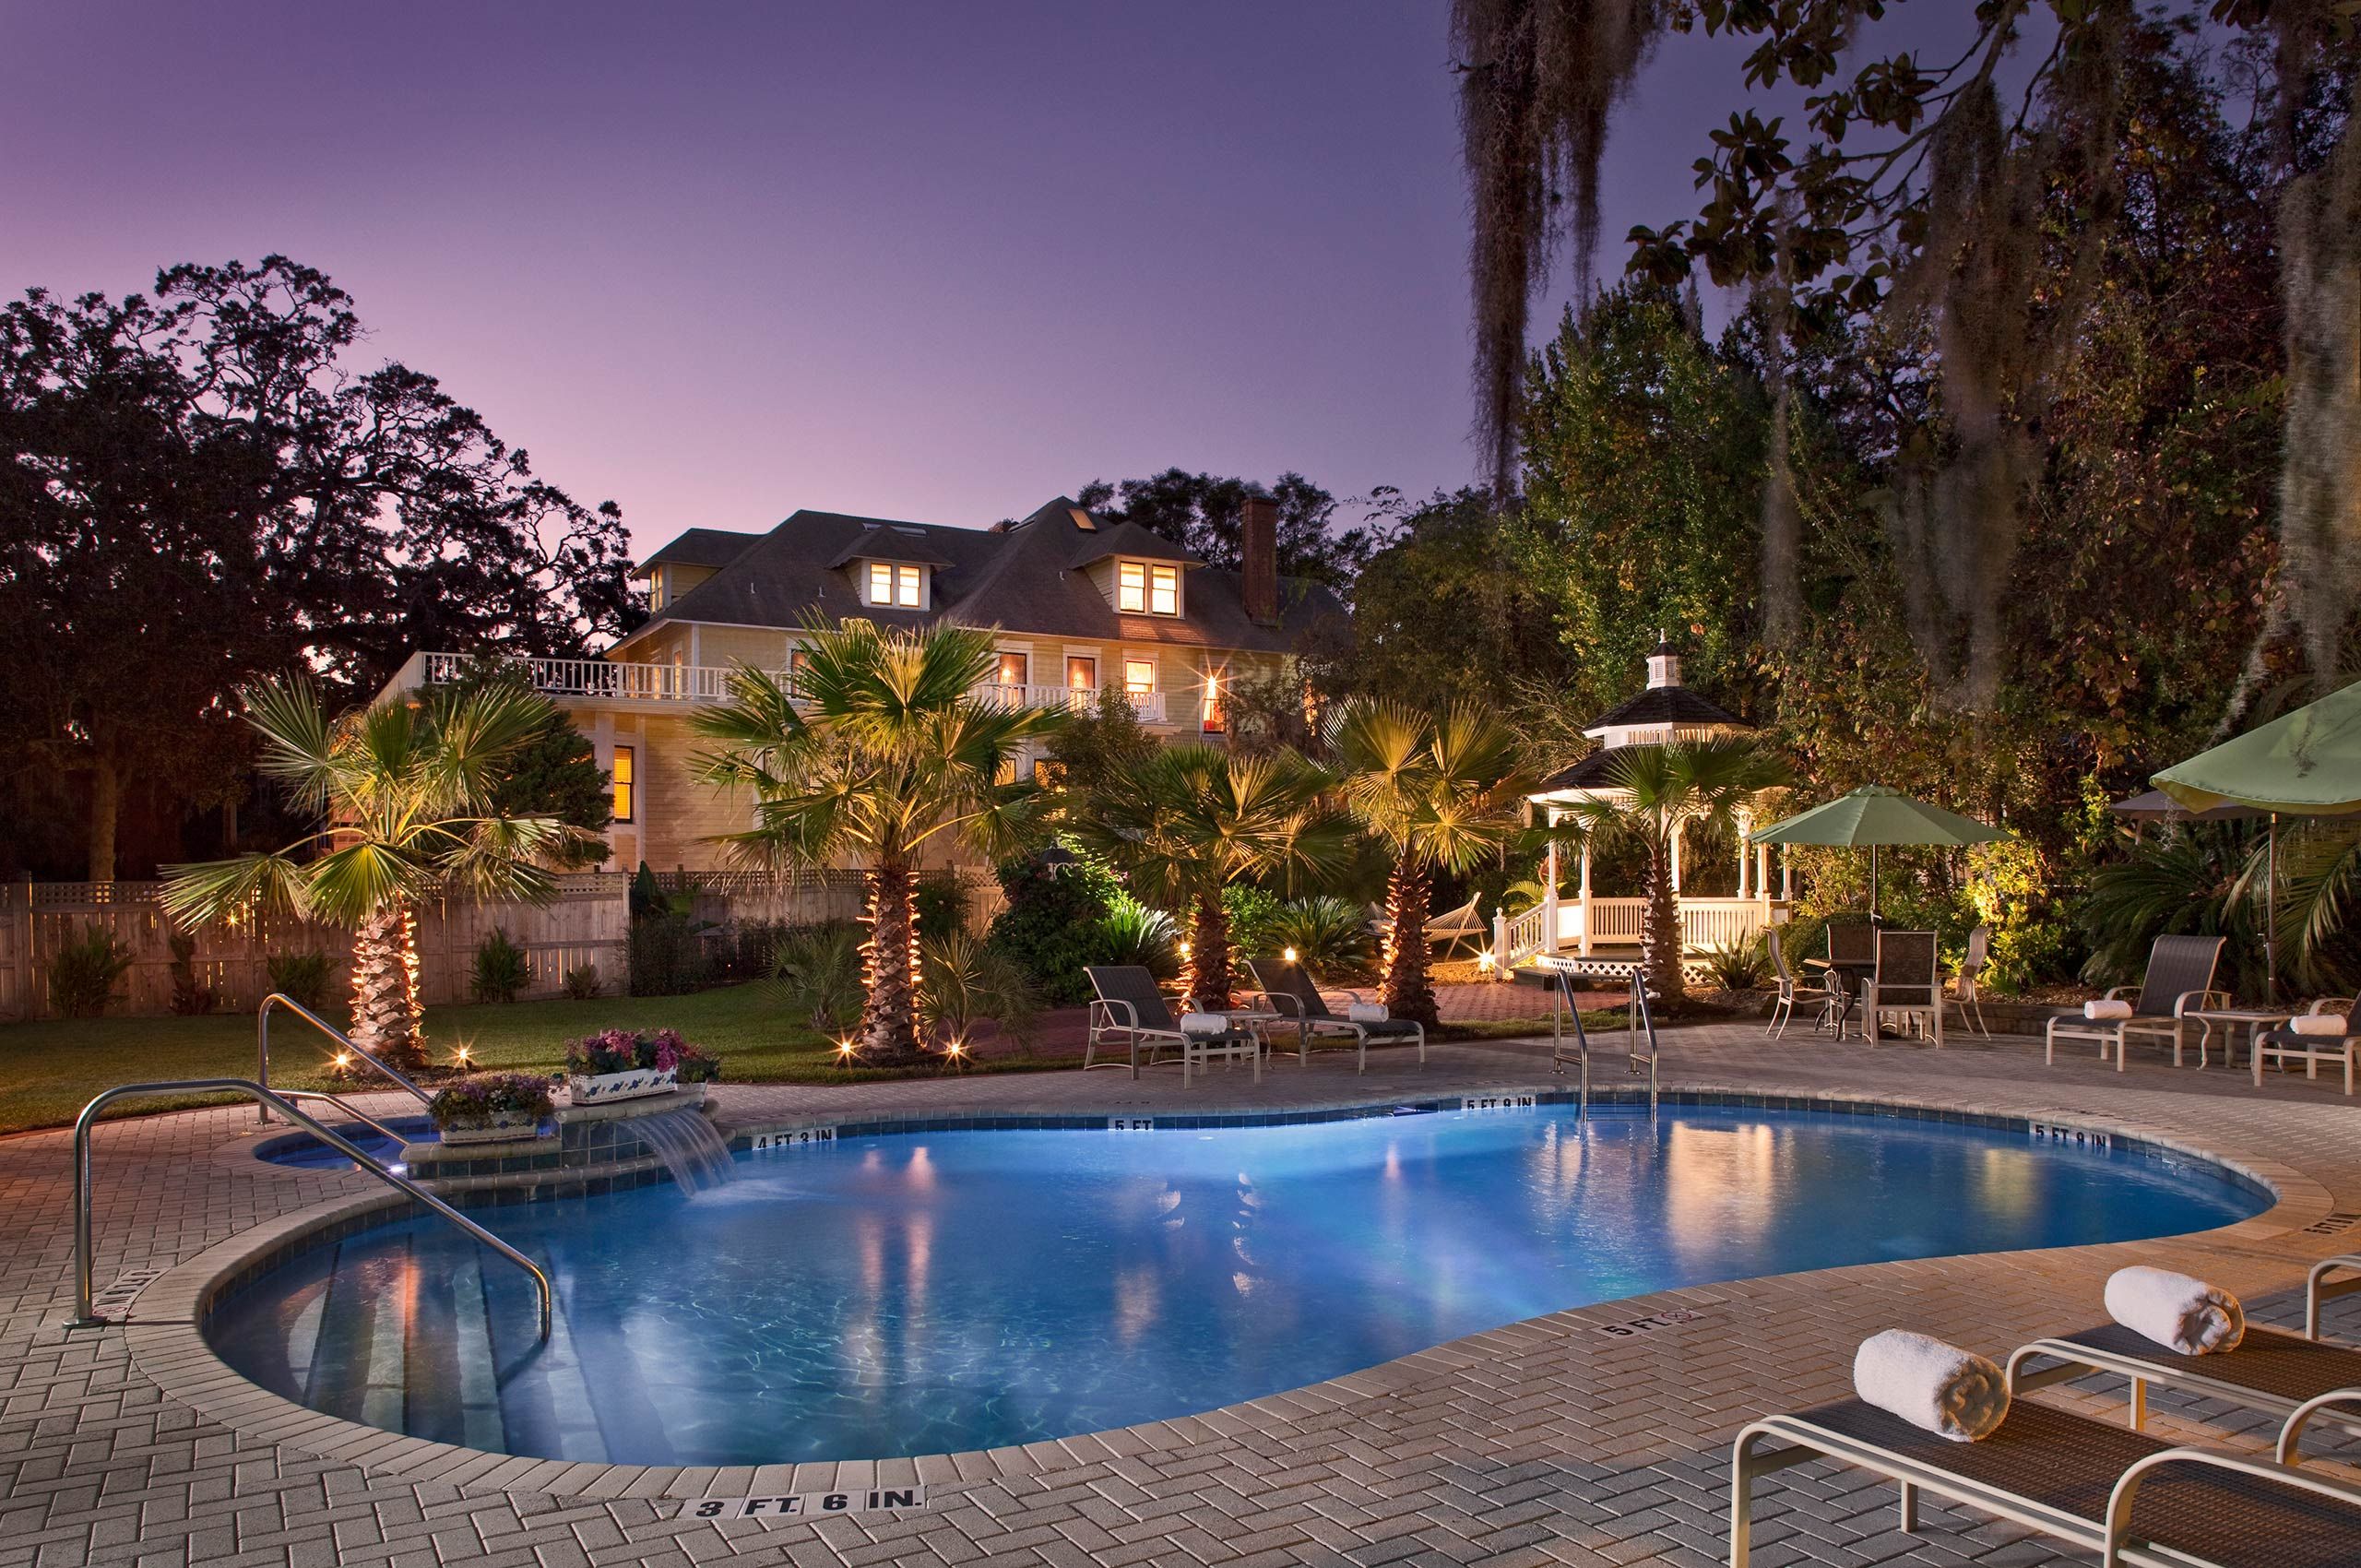 Exterior Architectural twilight - Florida Inn's Pool.jpg